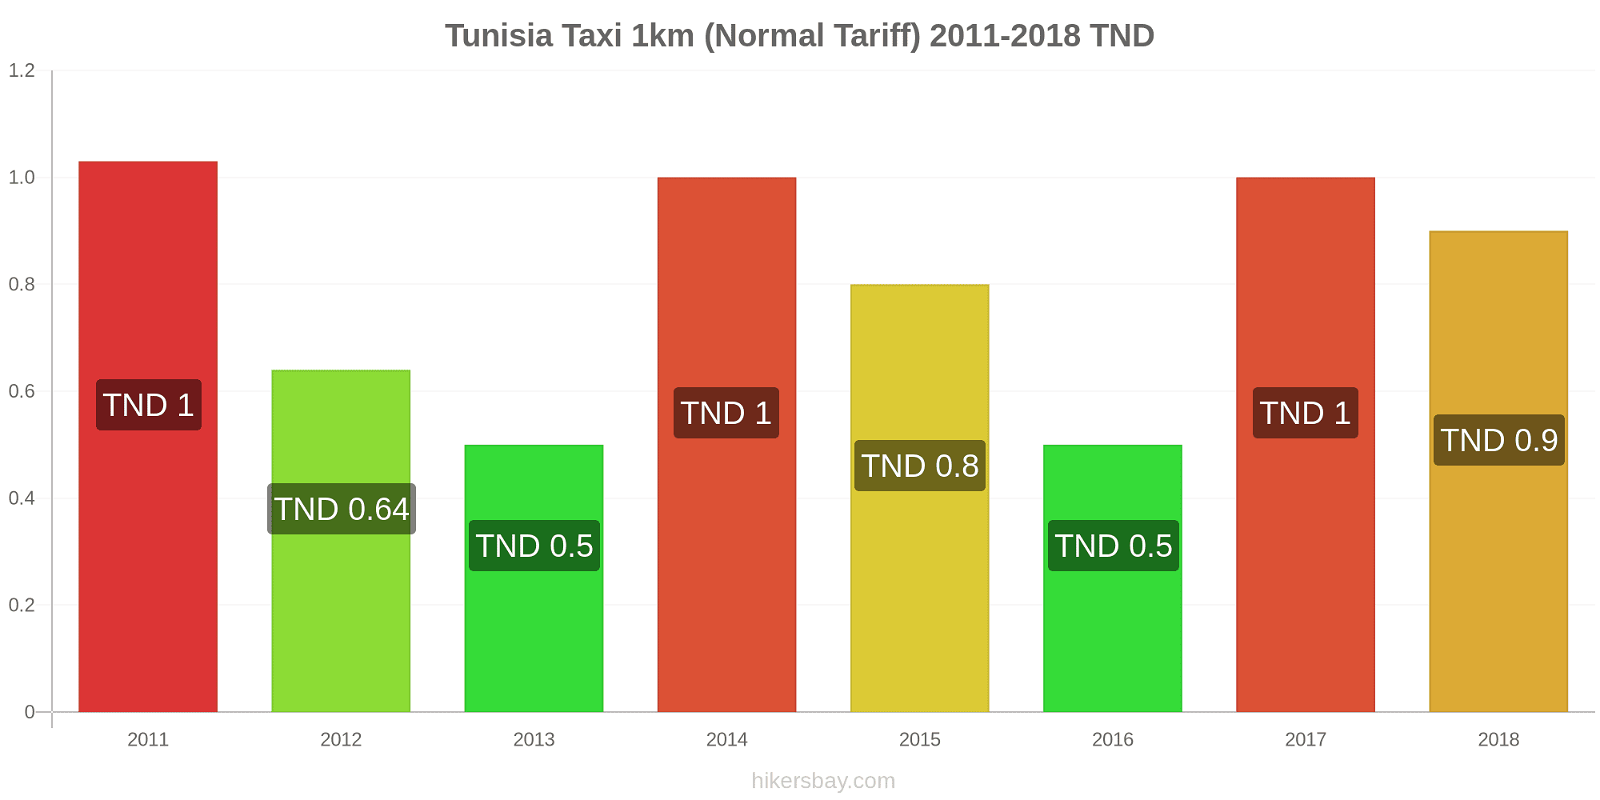 Tunisia price changes Taxi 1km (Normal Tariff) hikersbay.com